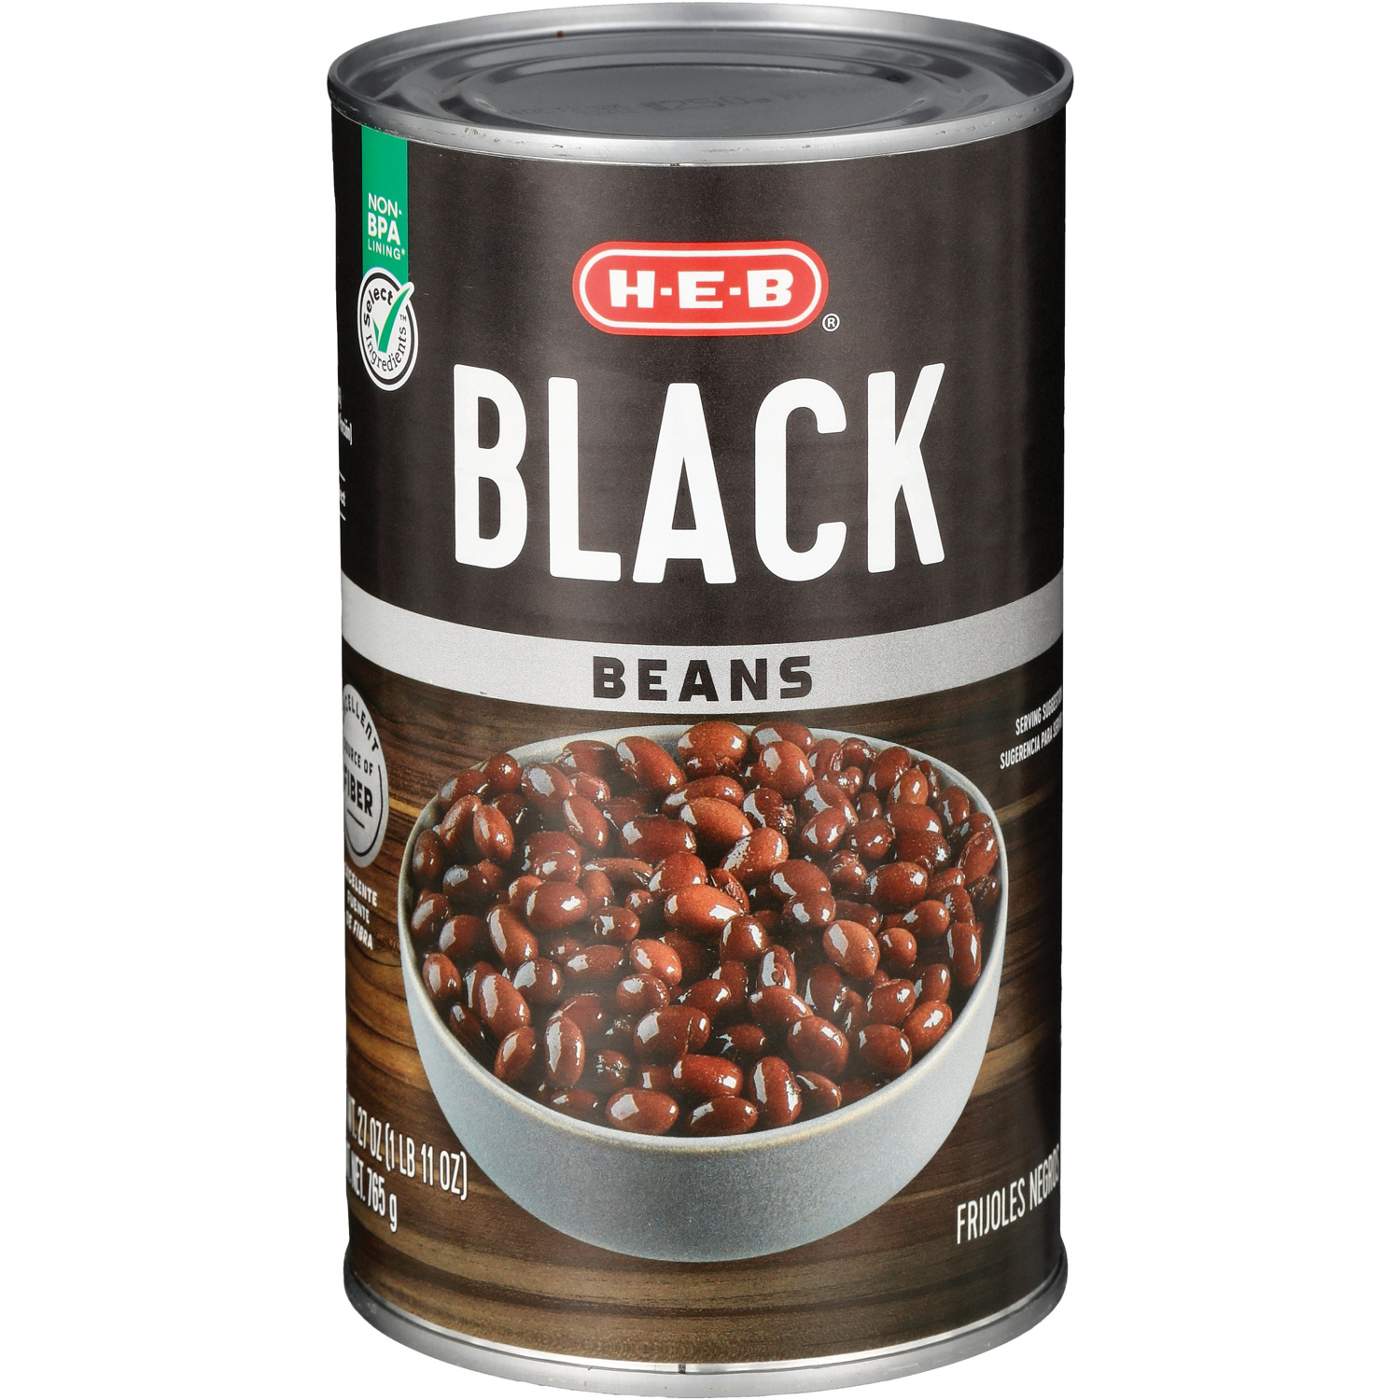 H-E-B Black Beans; image 2 of 2